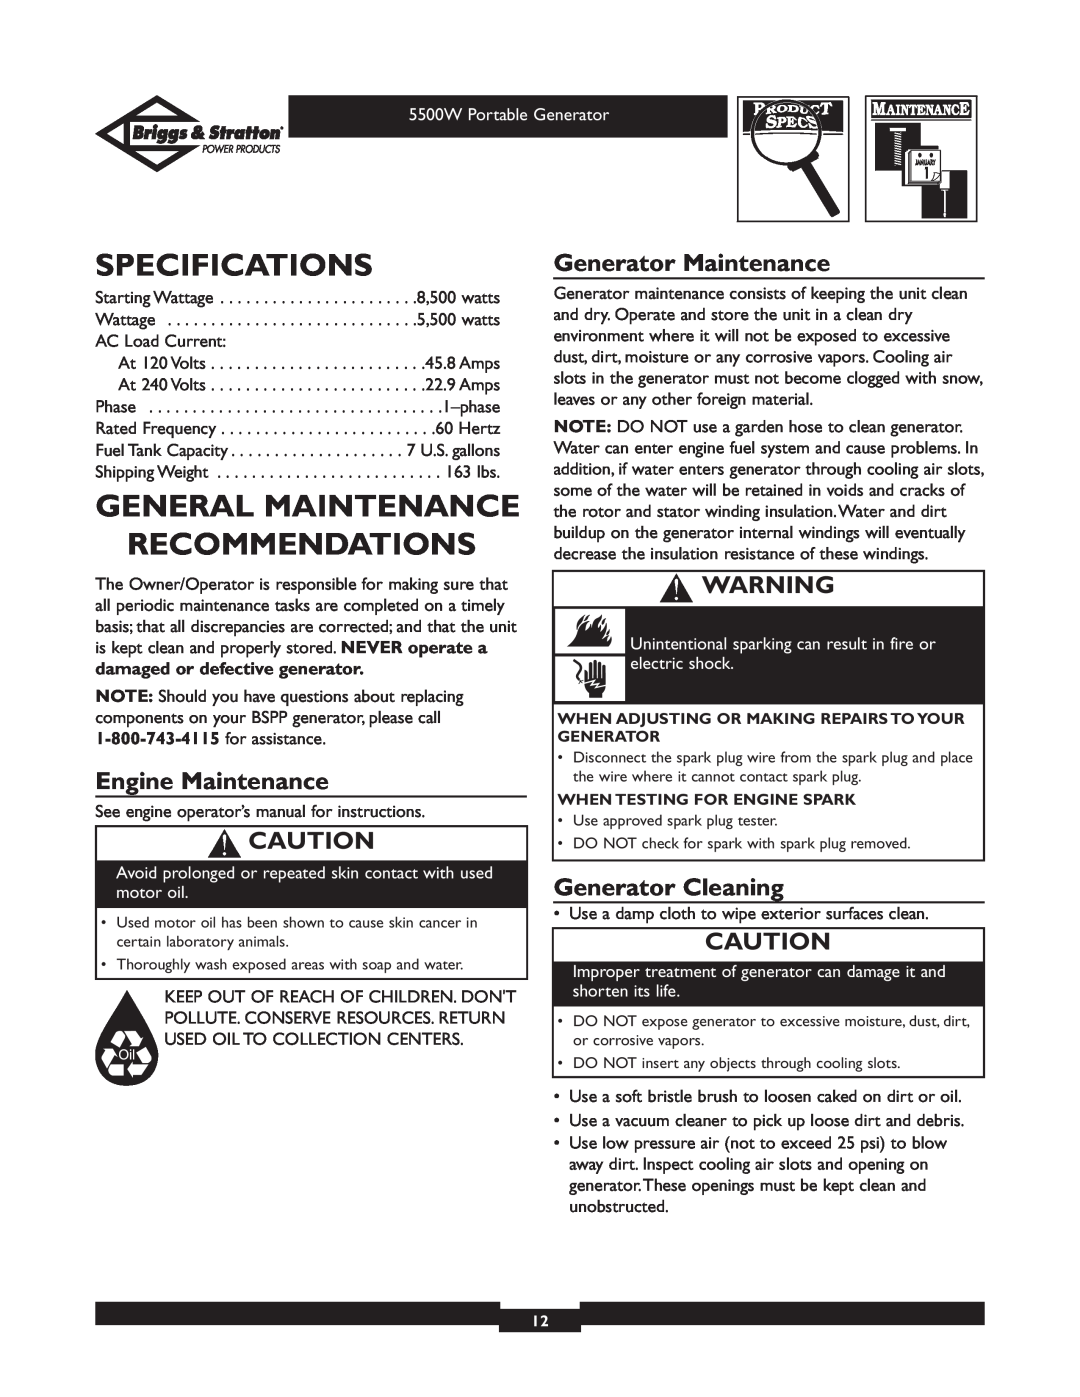 Briggs & Stratton 030209-1 Specifications, General Maintenance Recommendations, Engine Maintenance, Generator Maintenance 